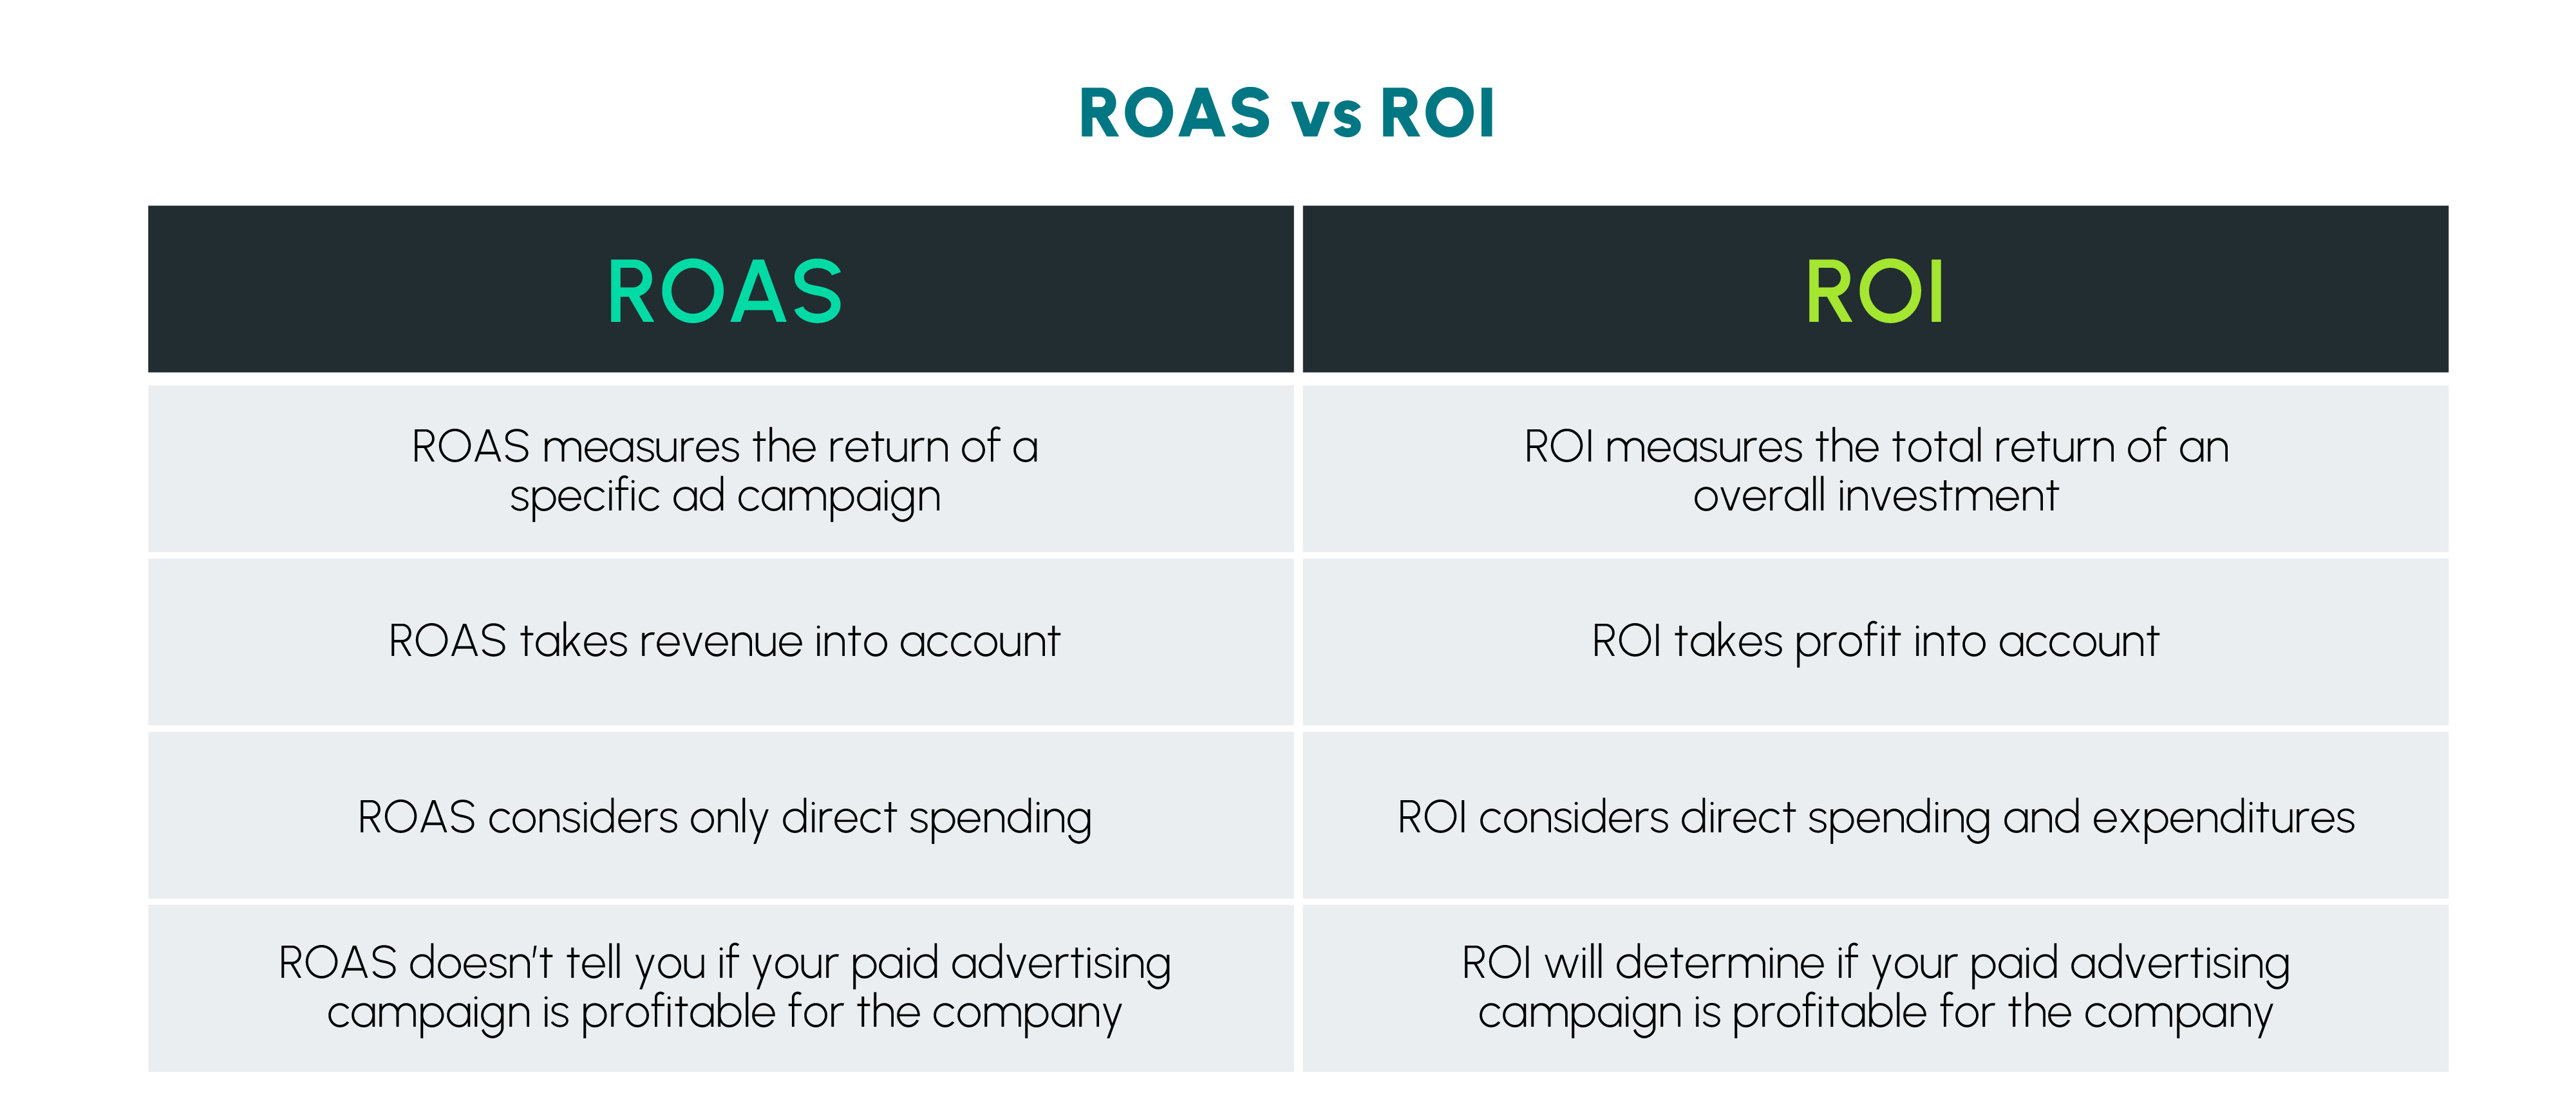 ROAS vs. ROI Comparison